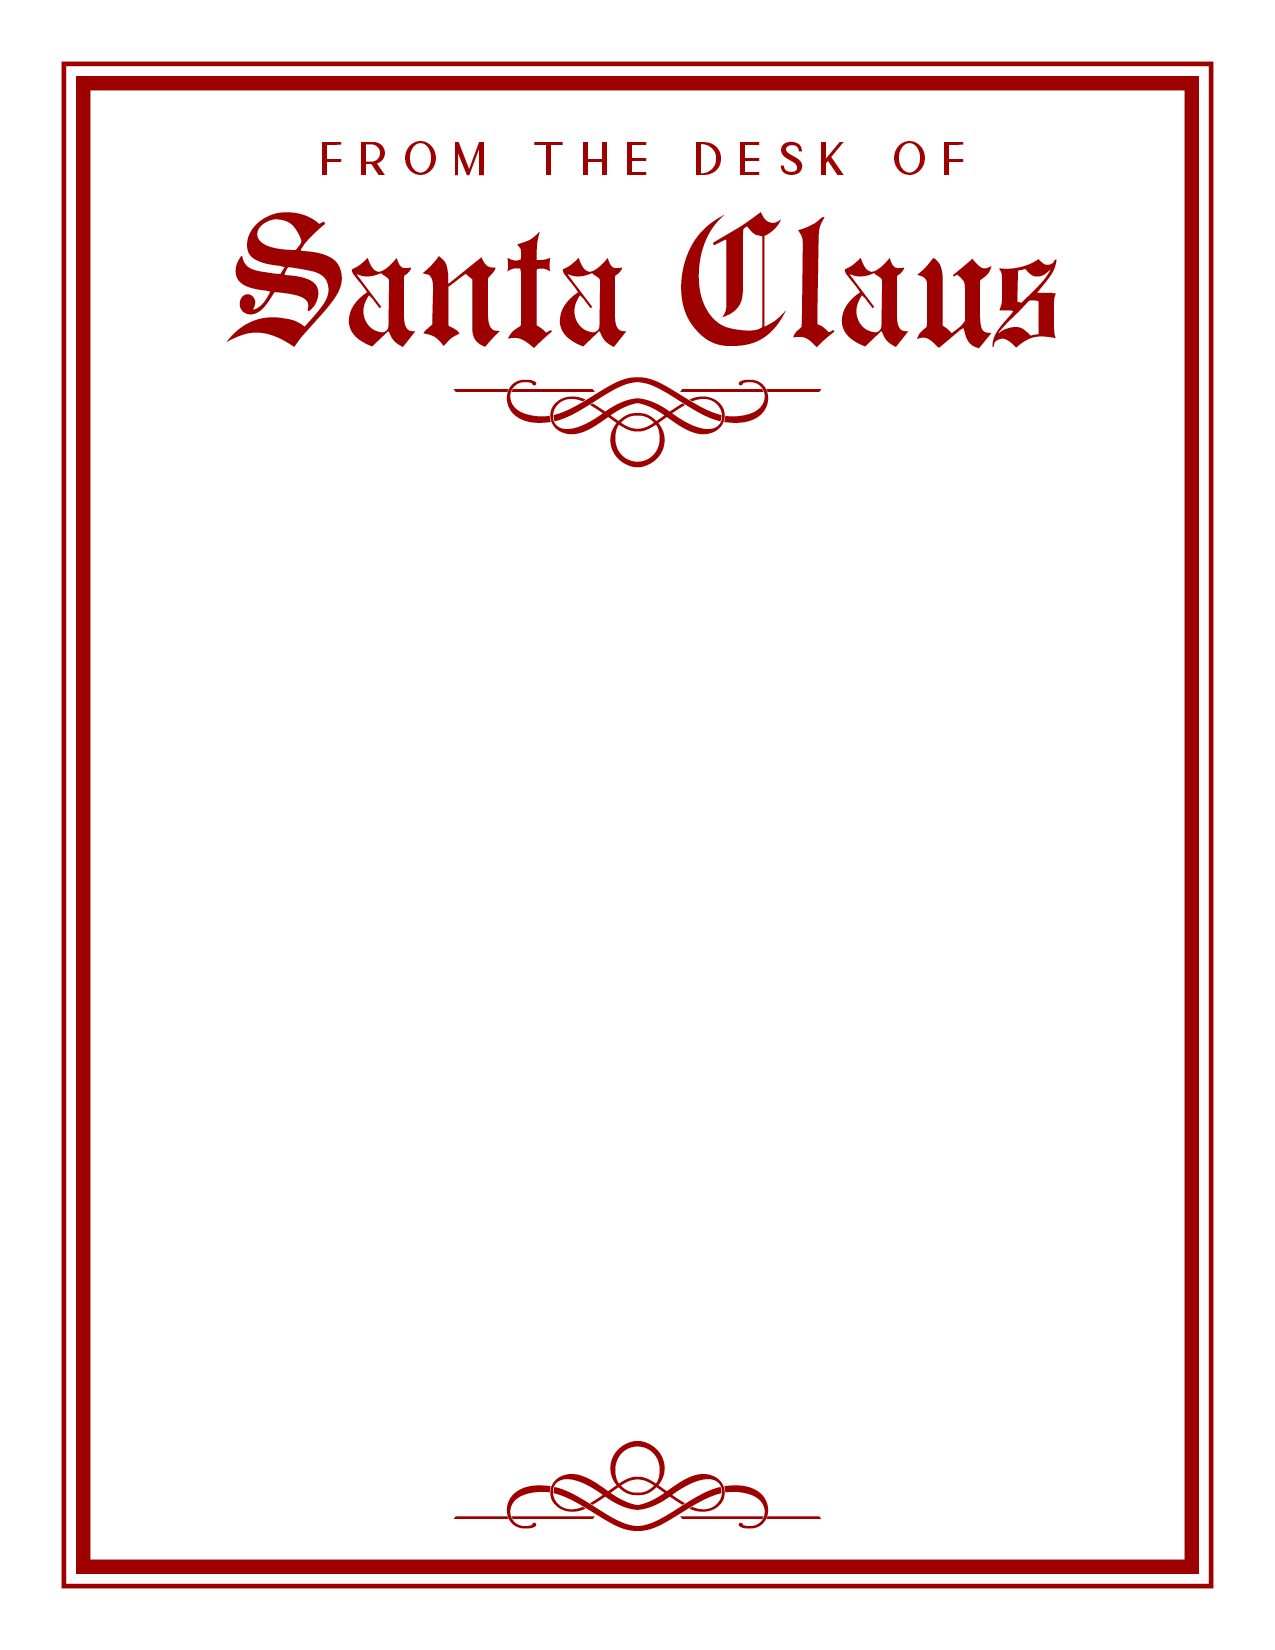 free-printable-santa-letterhead